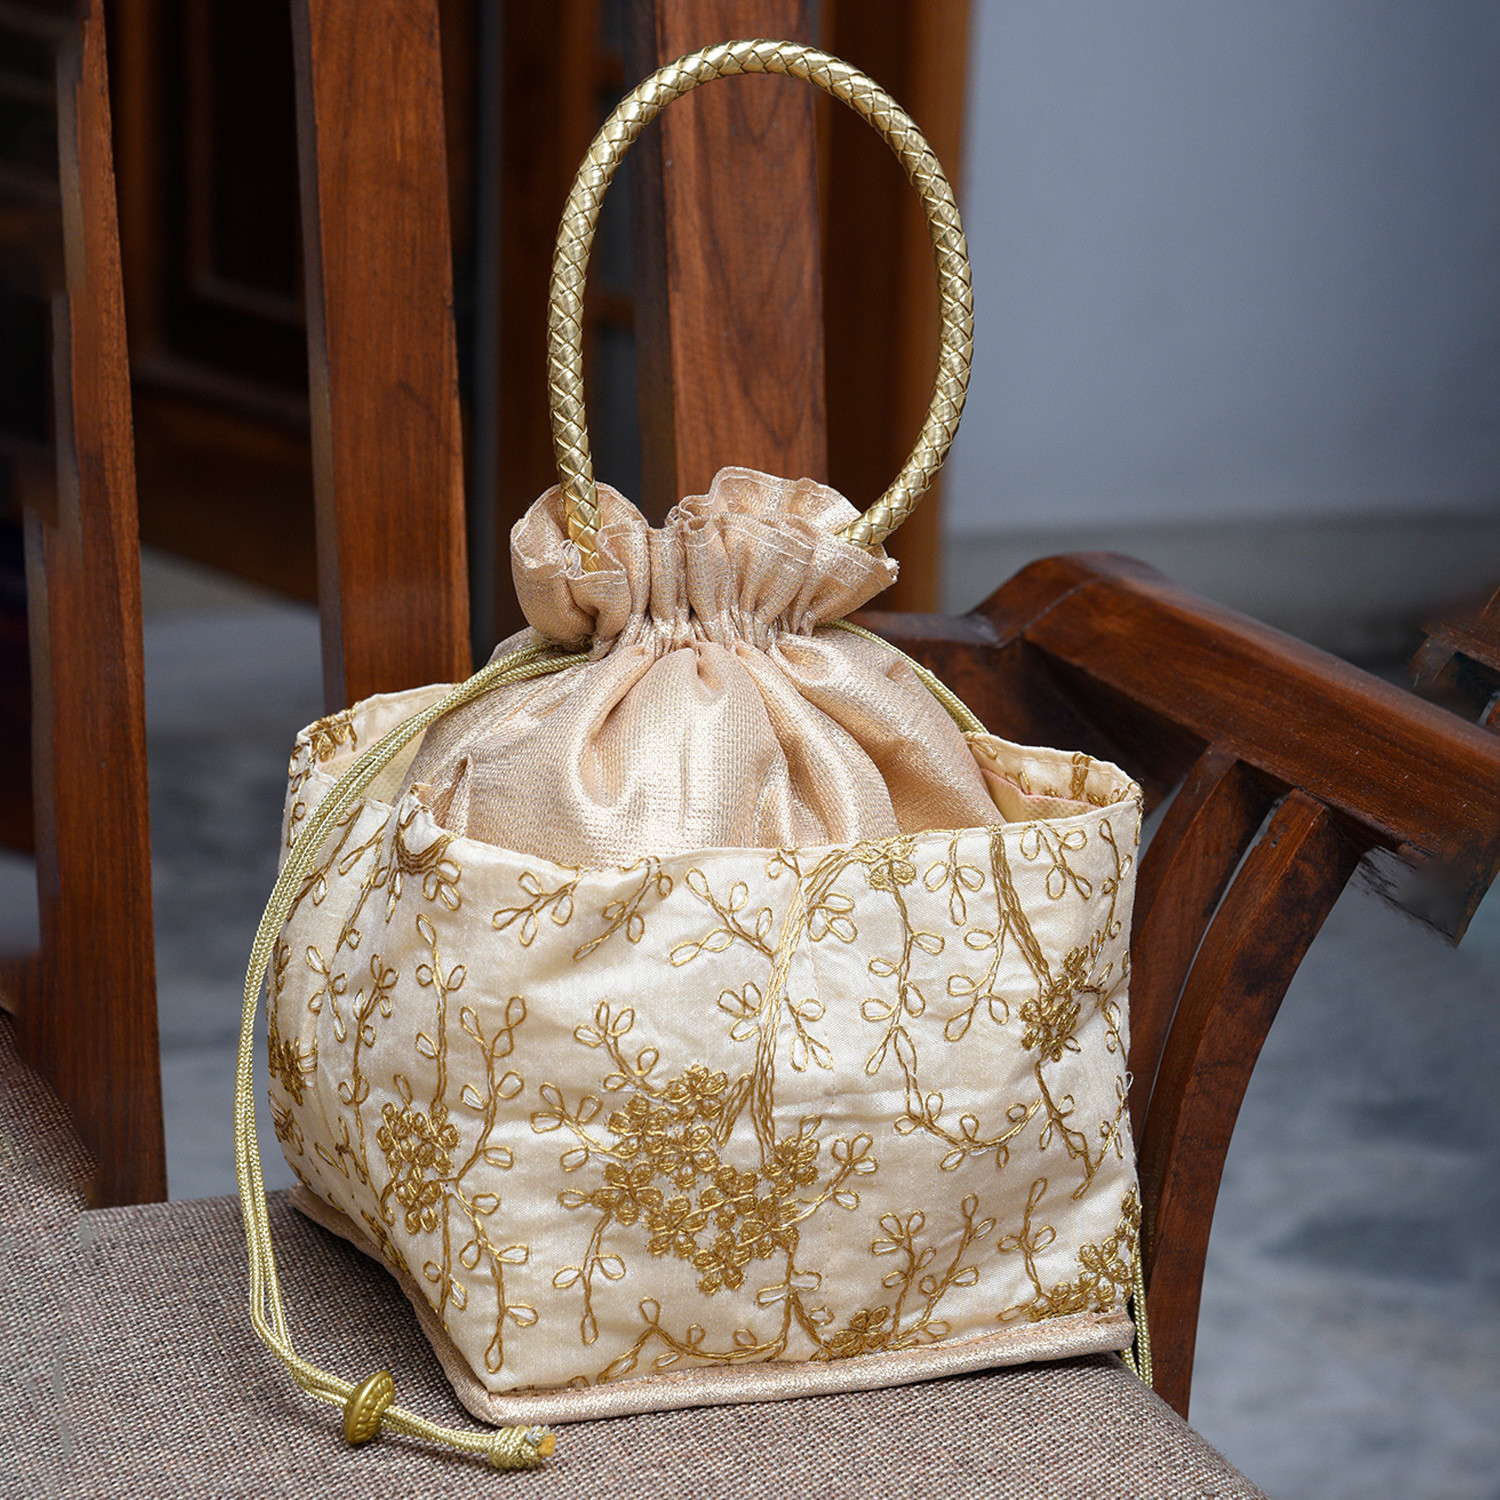 Kuber Industries Hand Bag|Silk Embroidery Drawstring Bag|Traditional Indian Handmade 5 Pocket Potli Bag with Golden Handle (Cream)